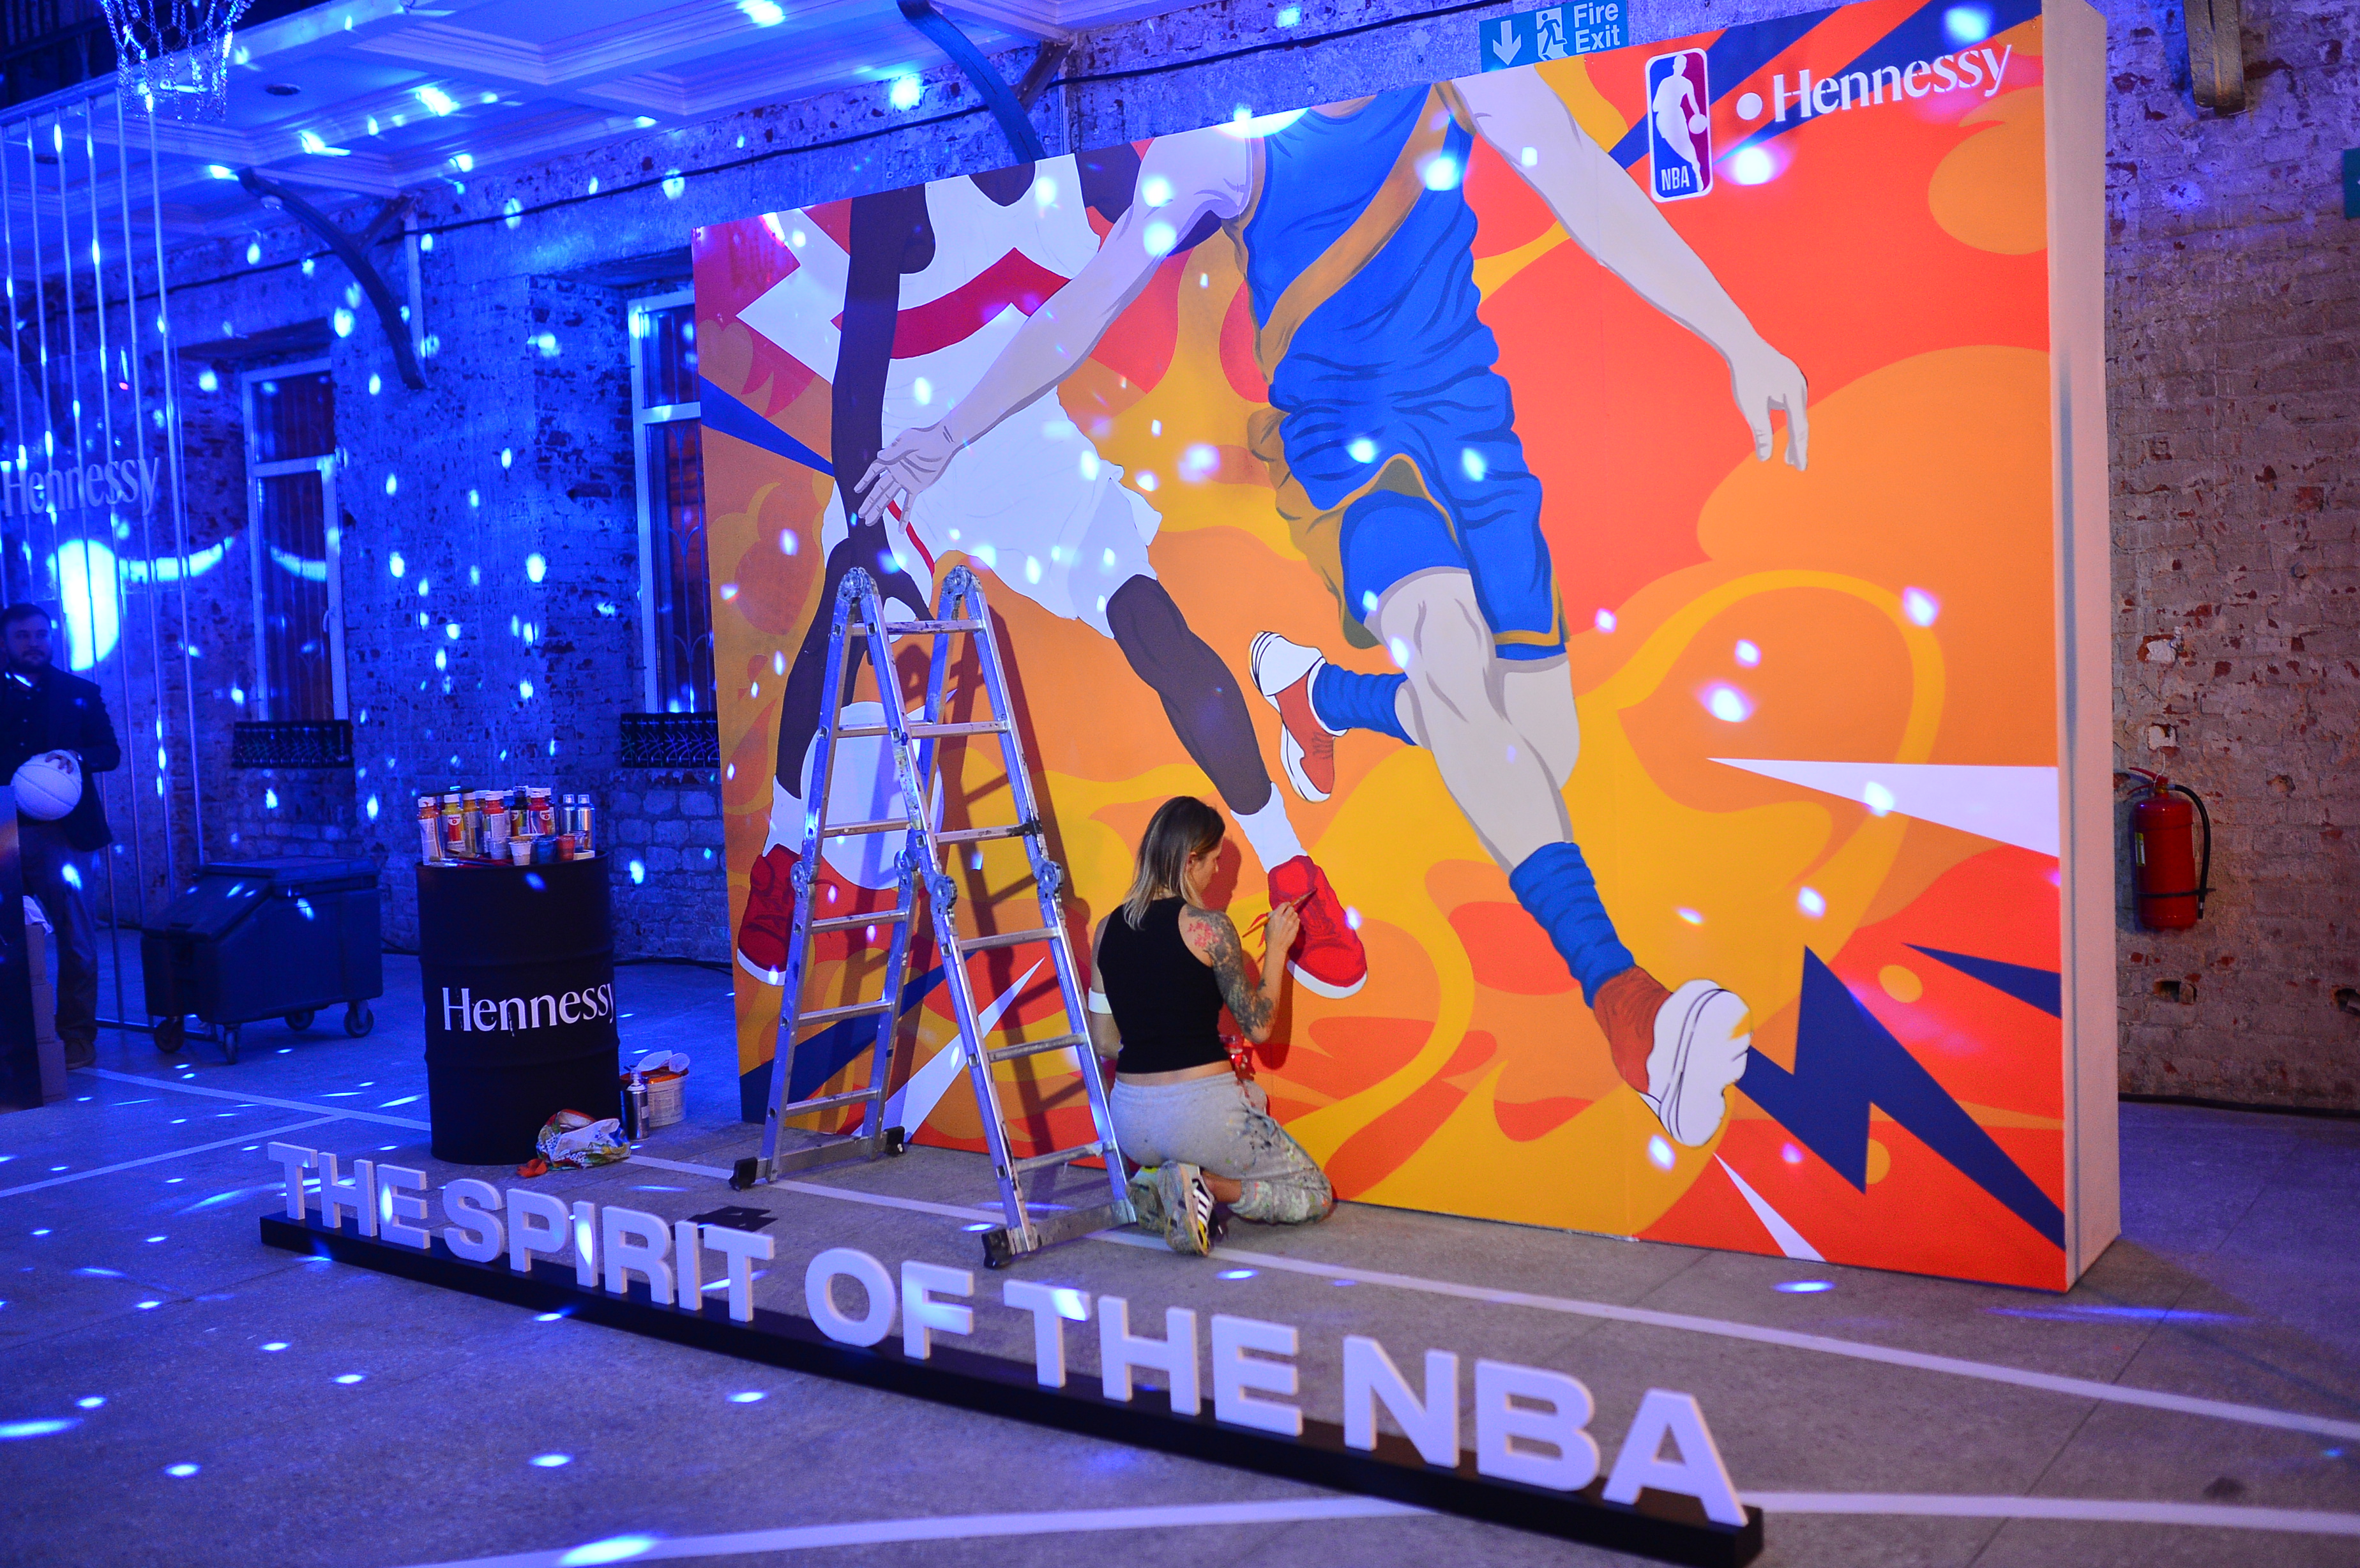 Hennessy-სა და NBA-ის თანამშრომლობა და ღონისძიება მესამე ლიმიტირებული გამოშვების აღსანიშნად